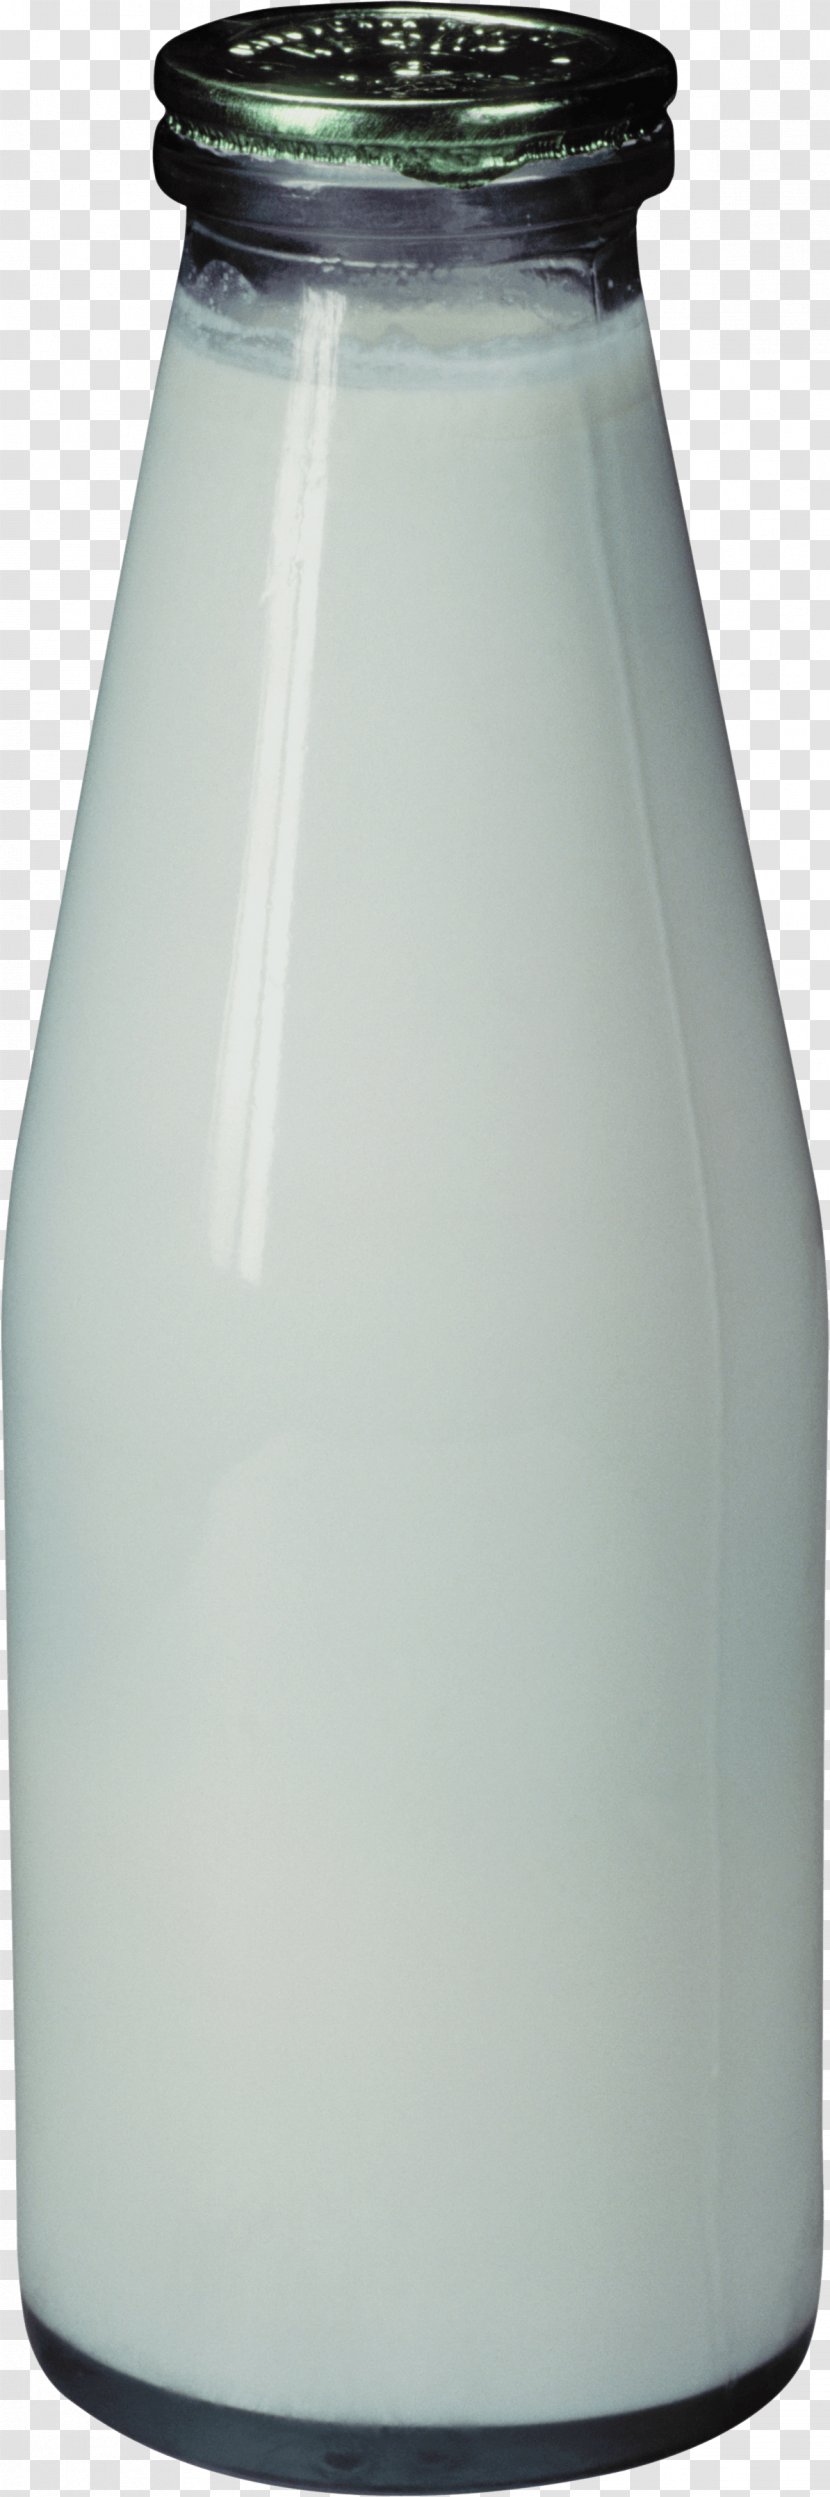 Milk Kefir Bottle Glass Transparent PNG